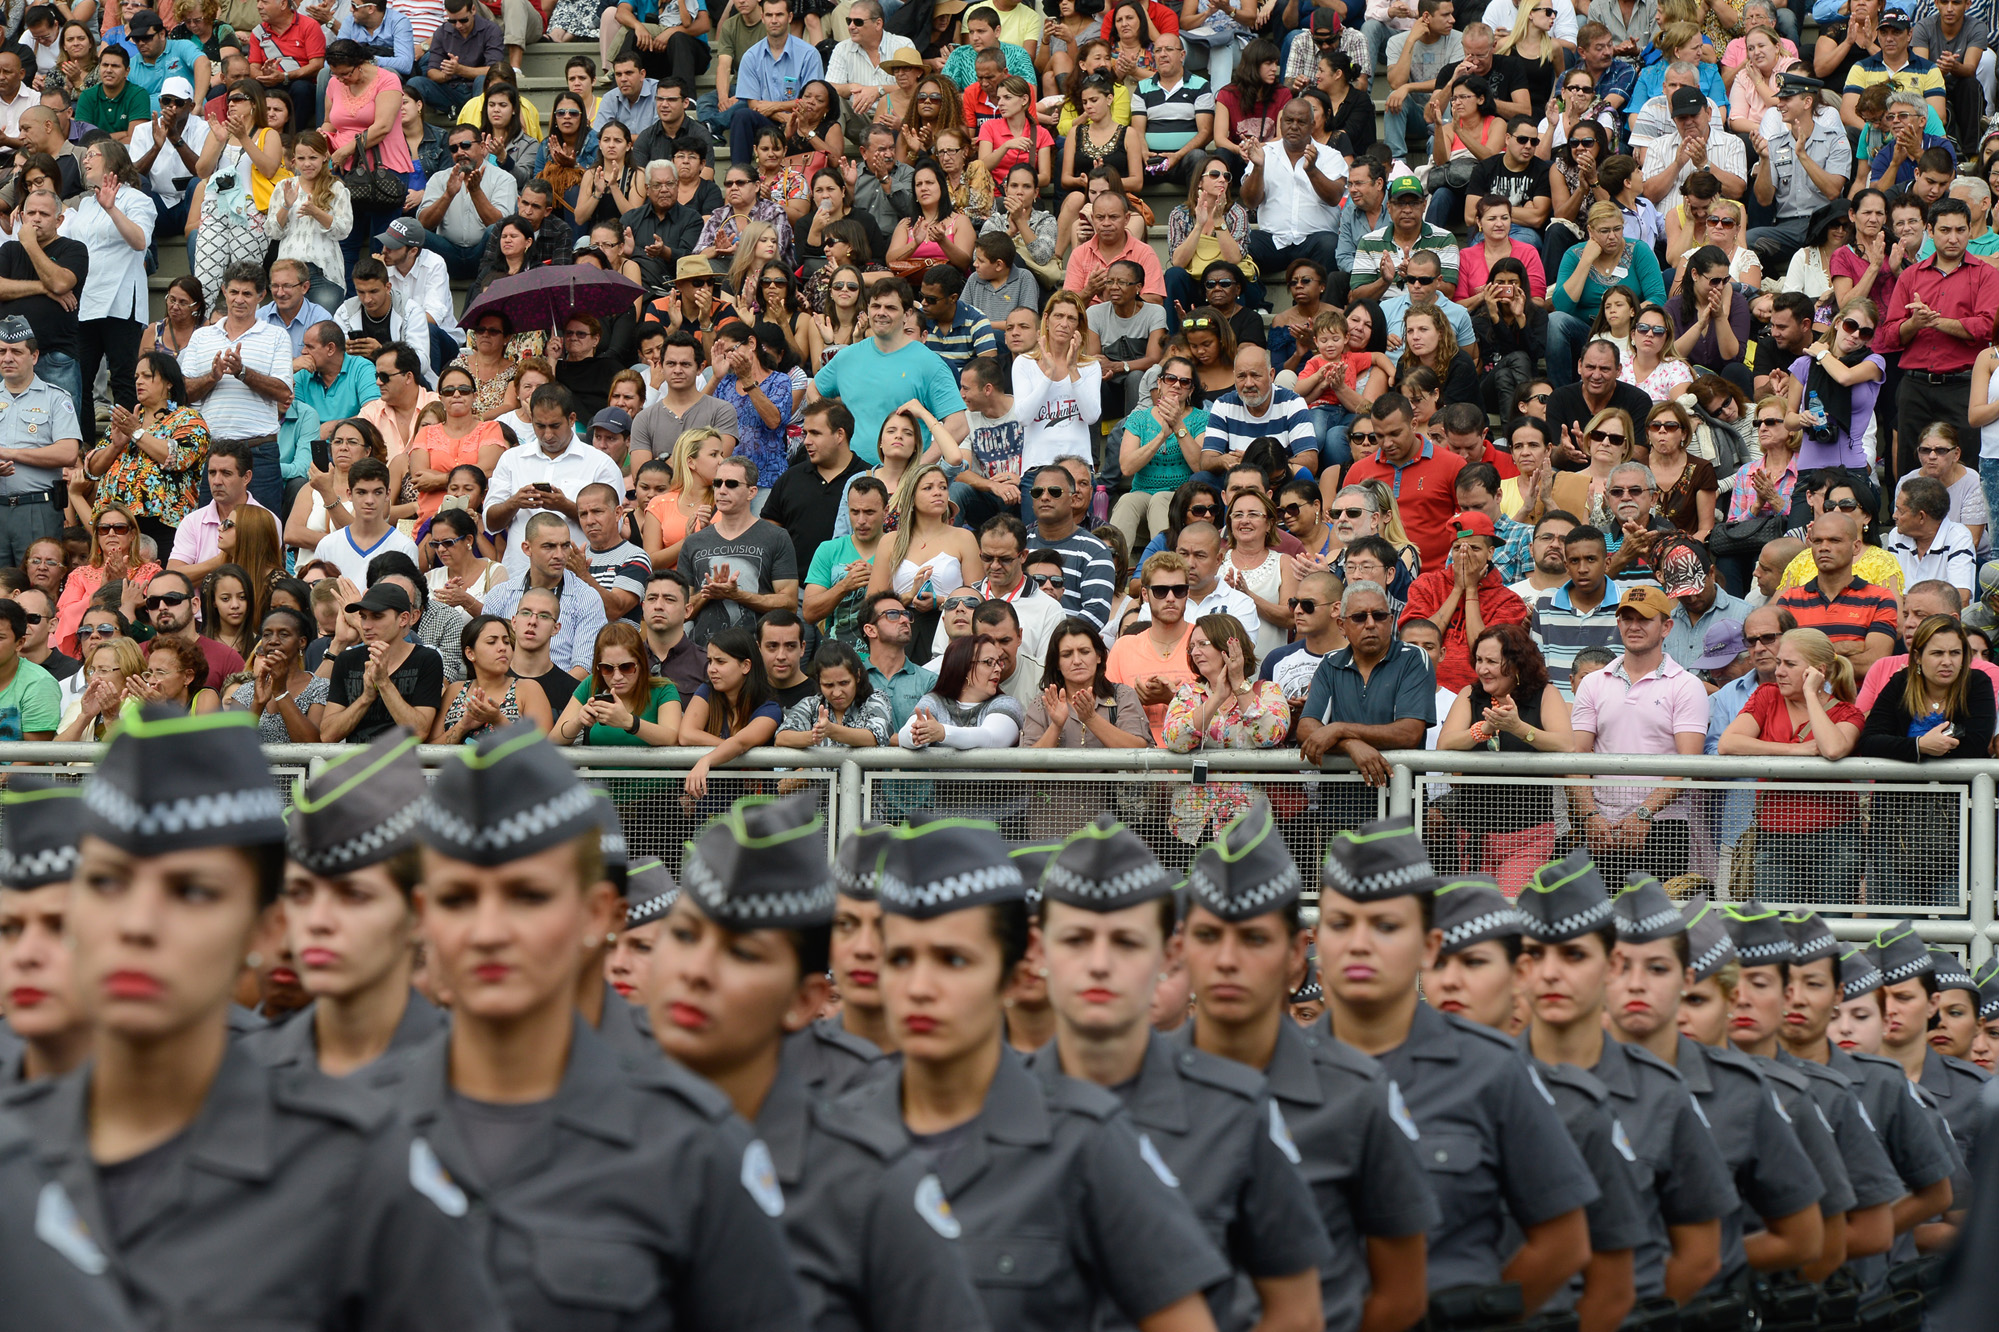 Solenidade de formatura de 2.614 soldados de Polcia Militar<a style='float:right;color:#ccc' href='https://www3.al.sp.gov.br/repositorio/noticia/N-05-2015/fg170944.jpg' target=_blank><i class='bi bi-zoom-in'></i> Clique para ver a imagem </a>